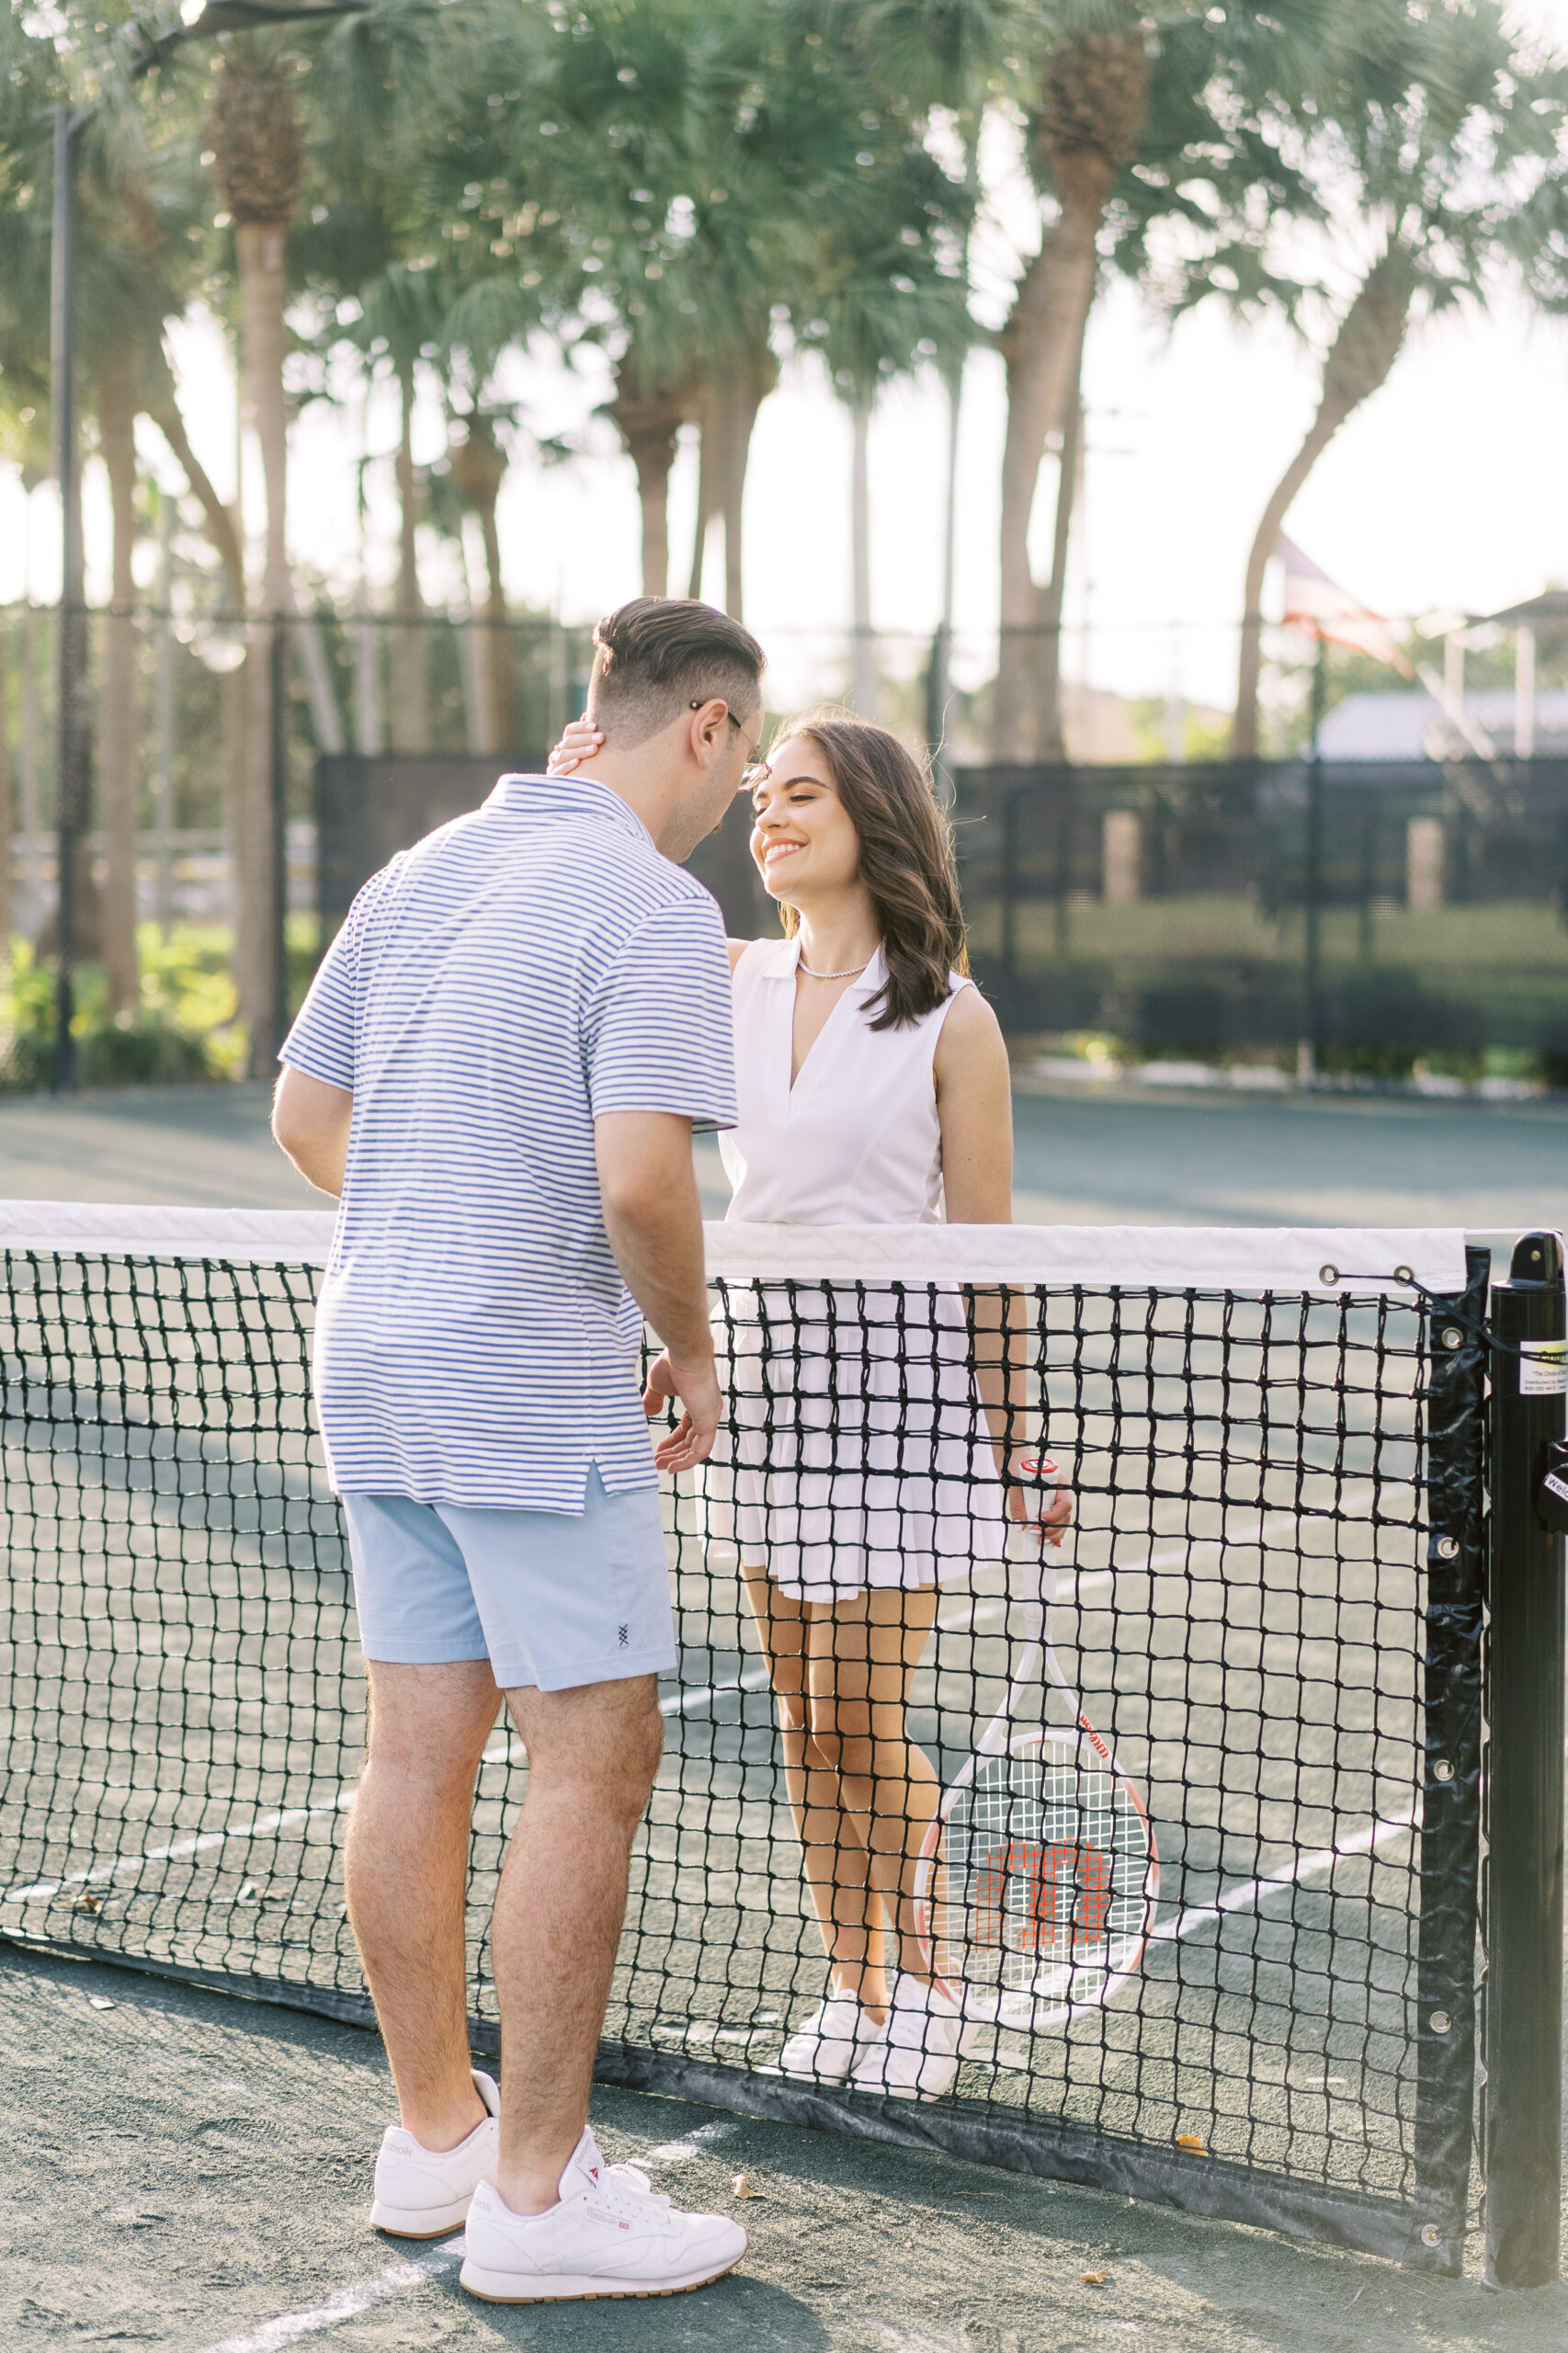 Tennis Engagement Photos